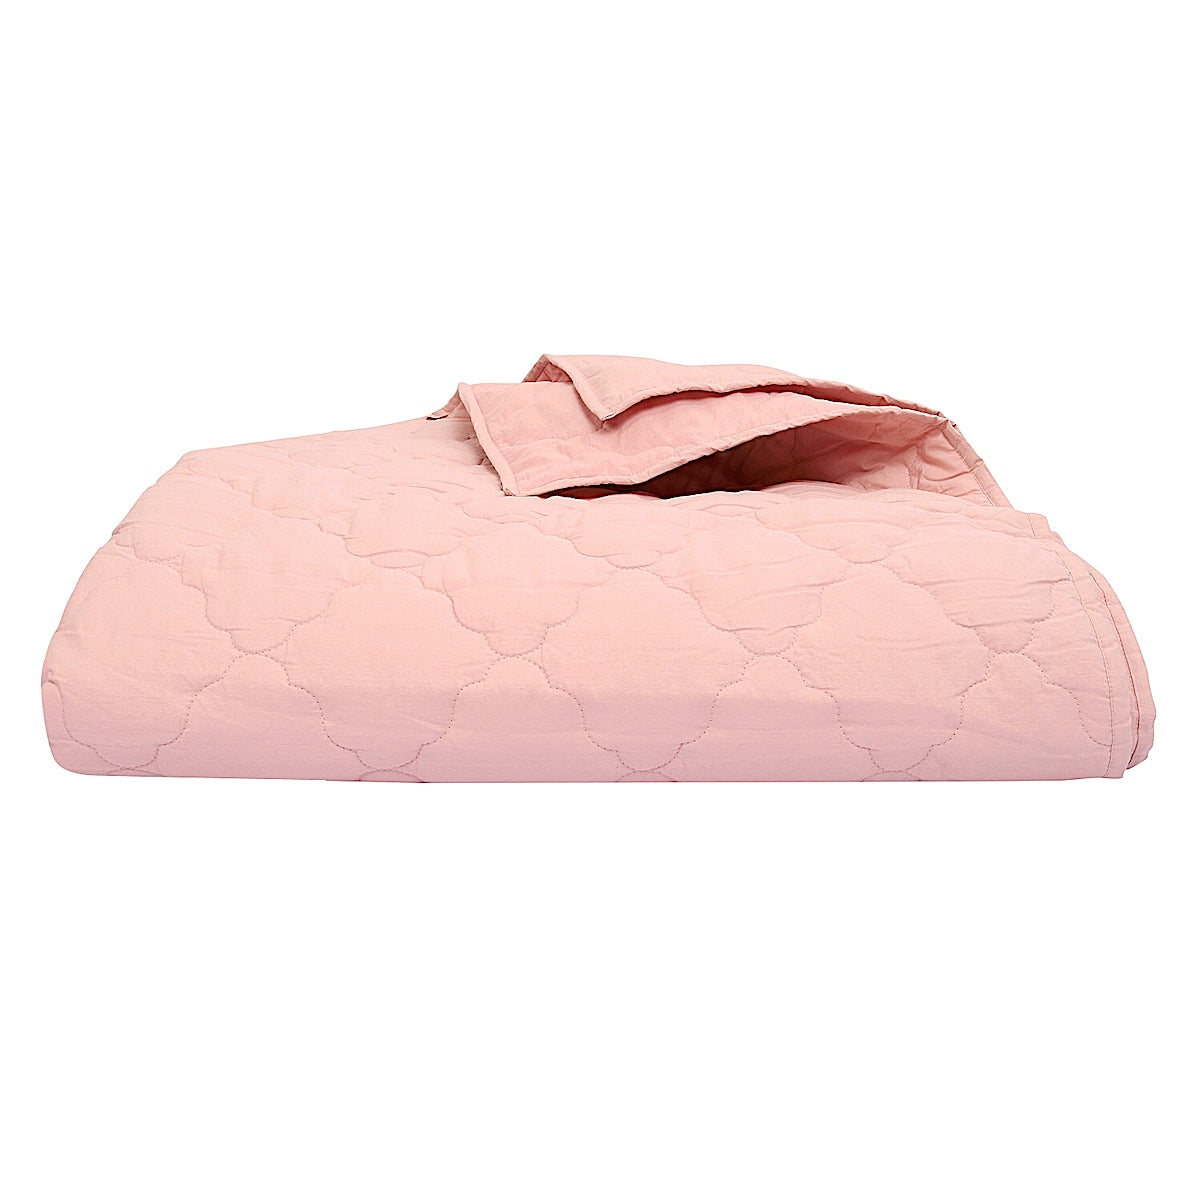 blush pink cotton quilt